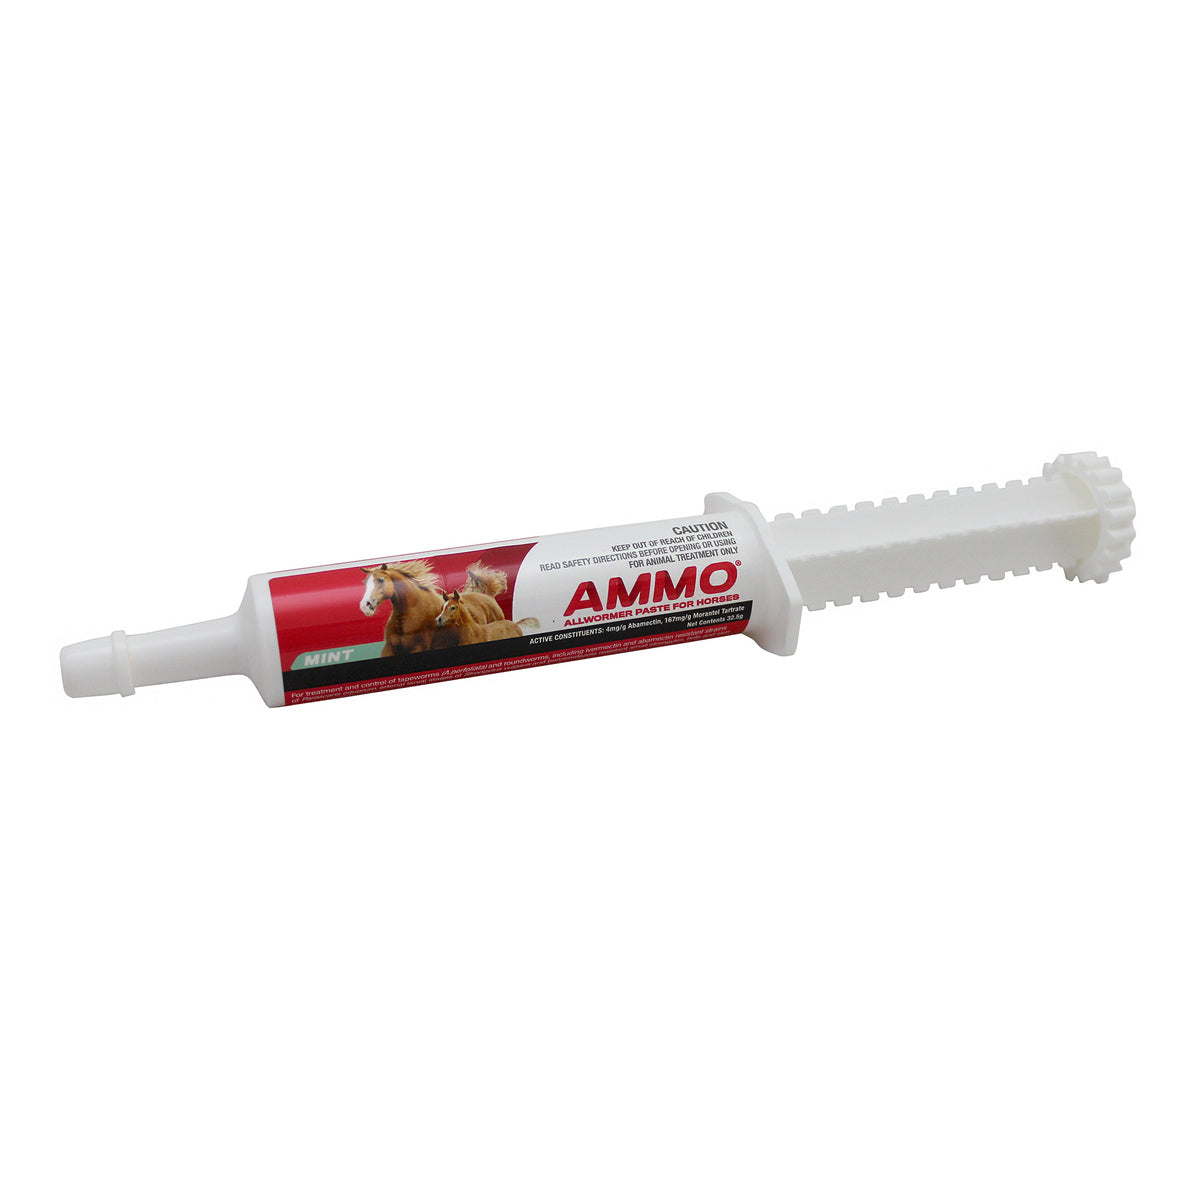 AMMO Allwormer Paste For Horses (Red) 32.5g